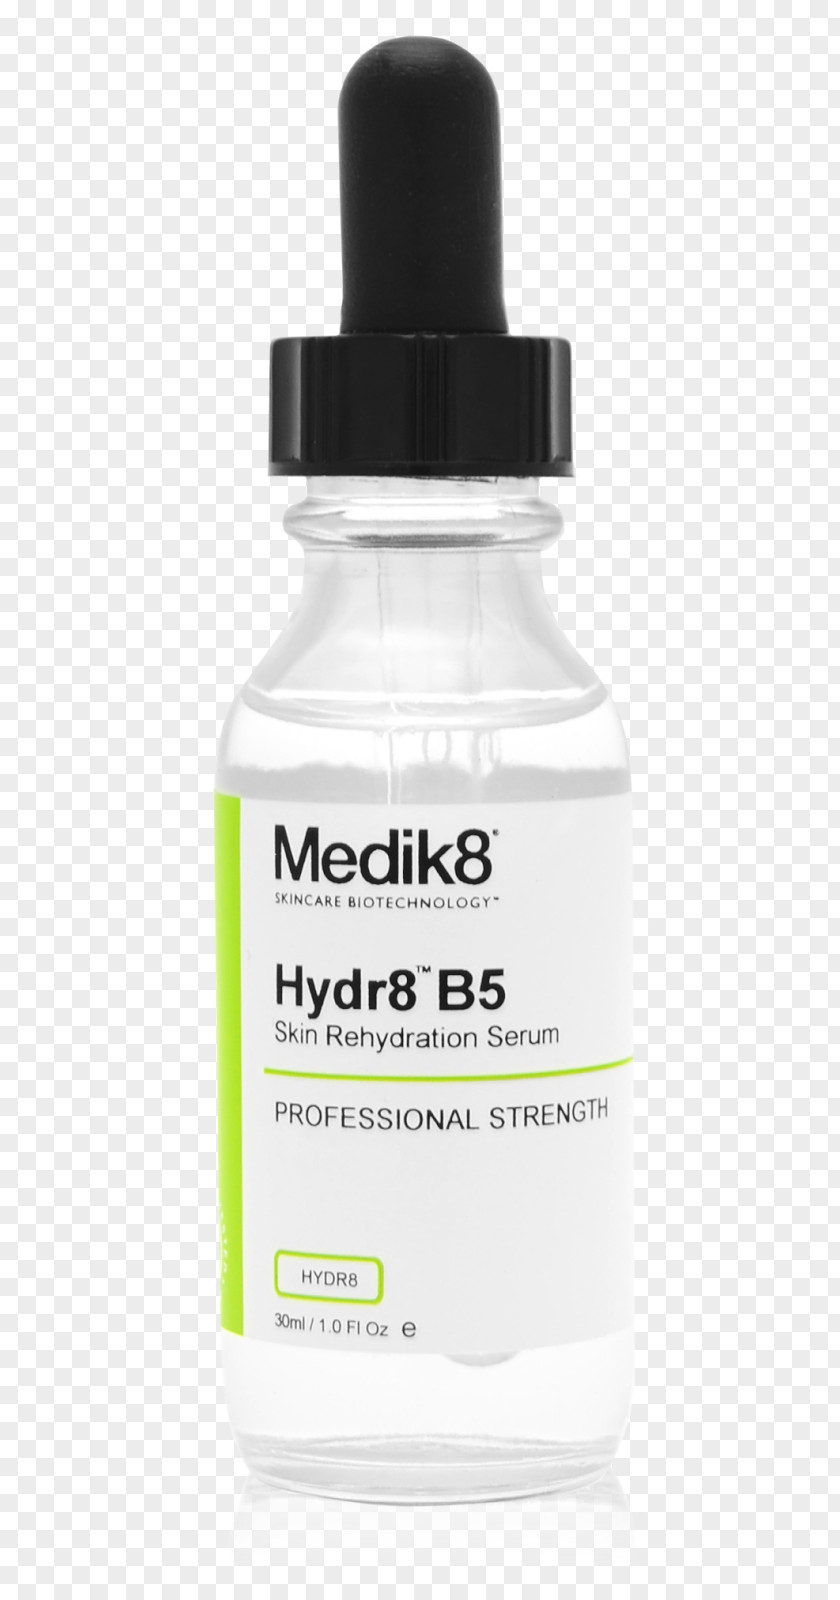 Gauze Medik8 Hydr8 B5 Skin Care Cream Serum PNG